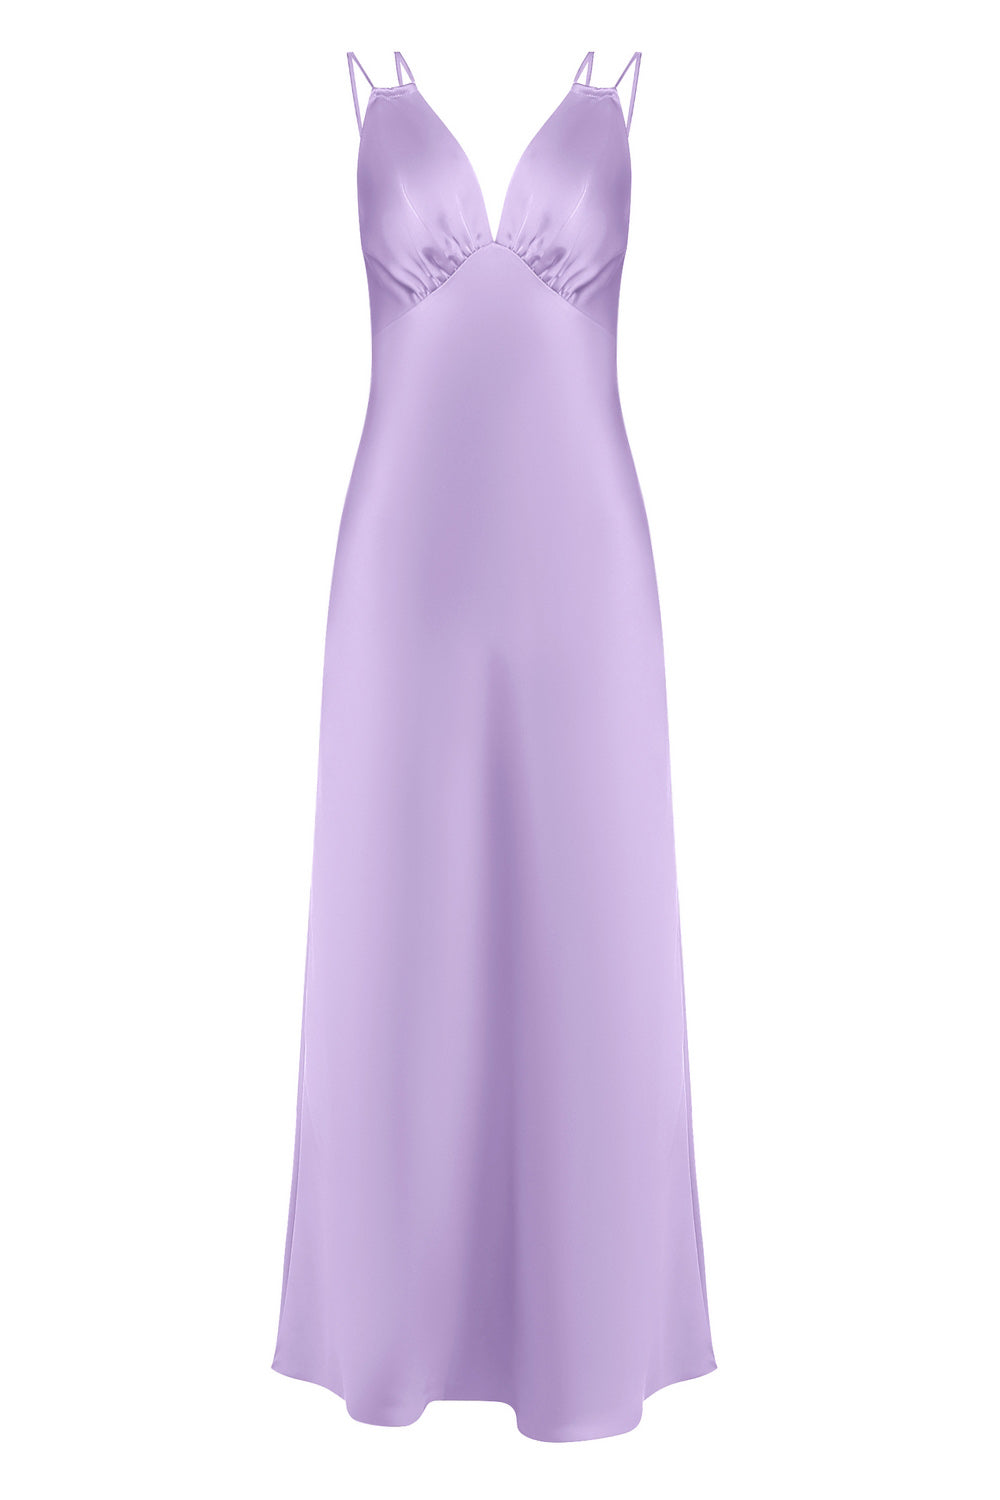 Eden Roc Purple Midi Silk Dress